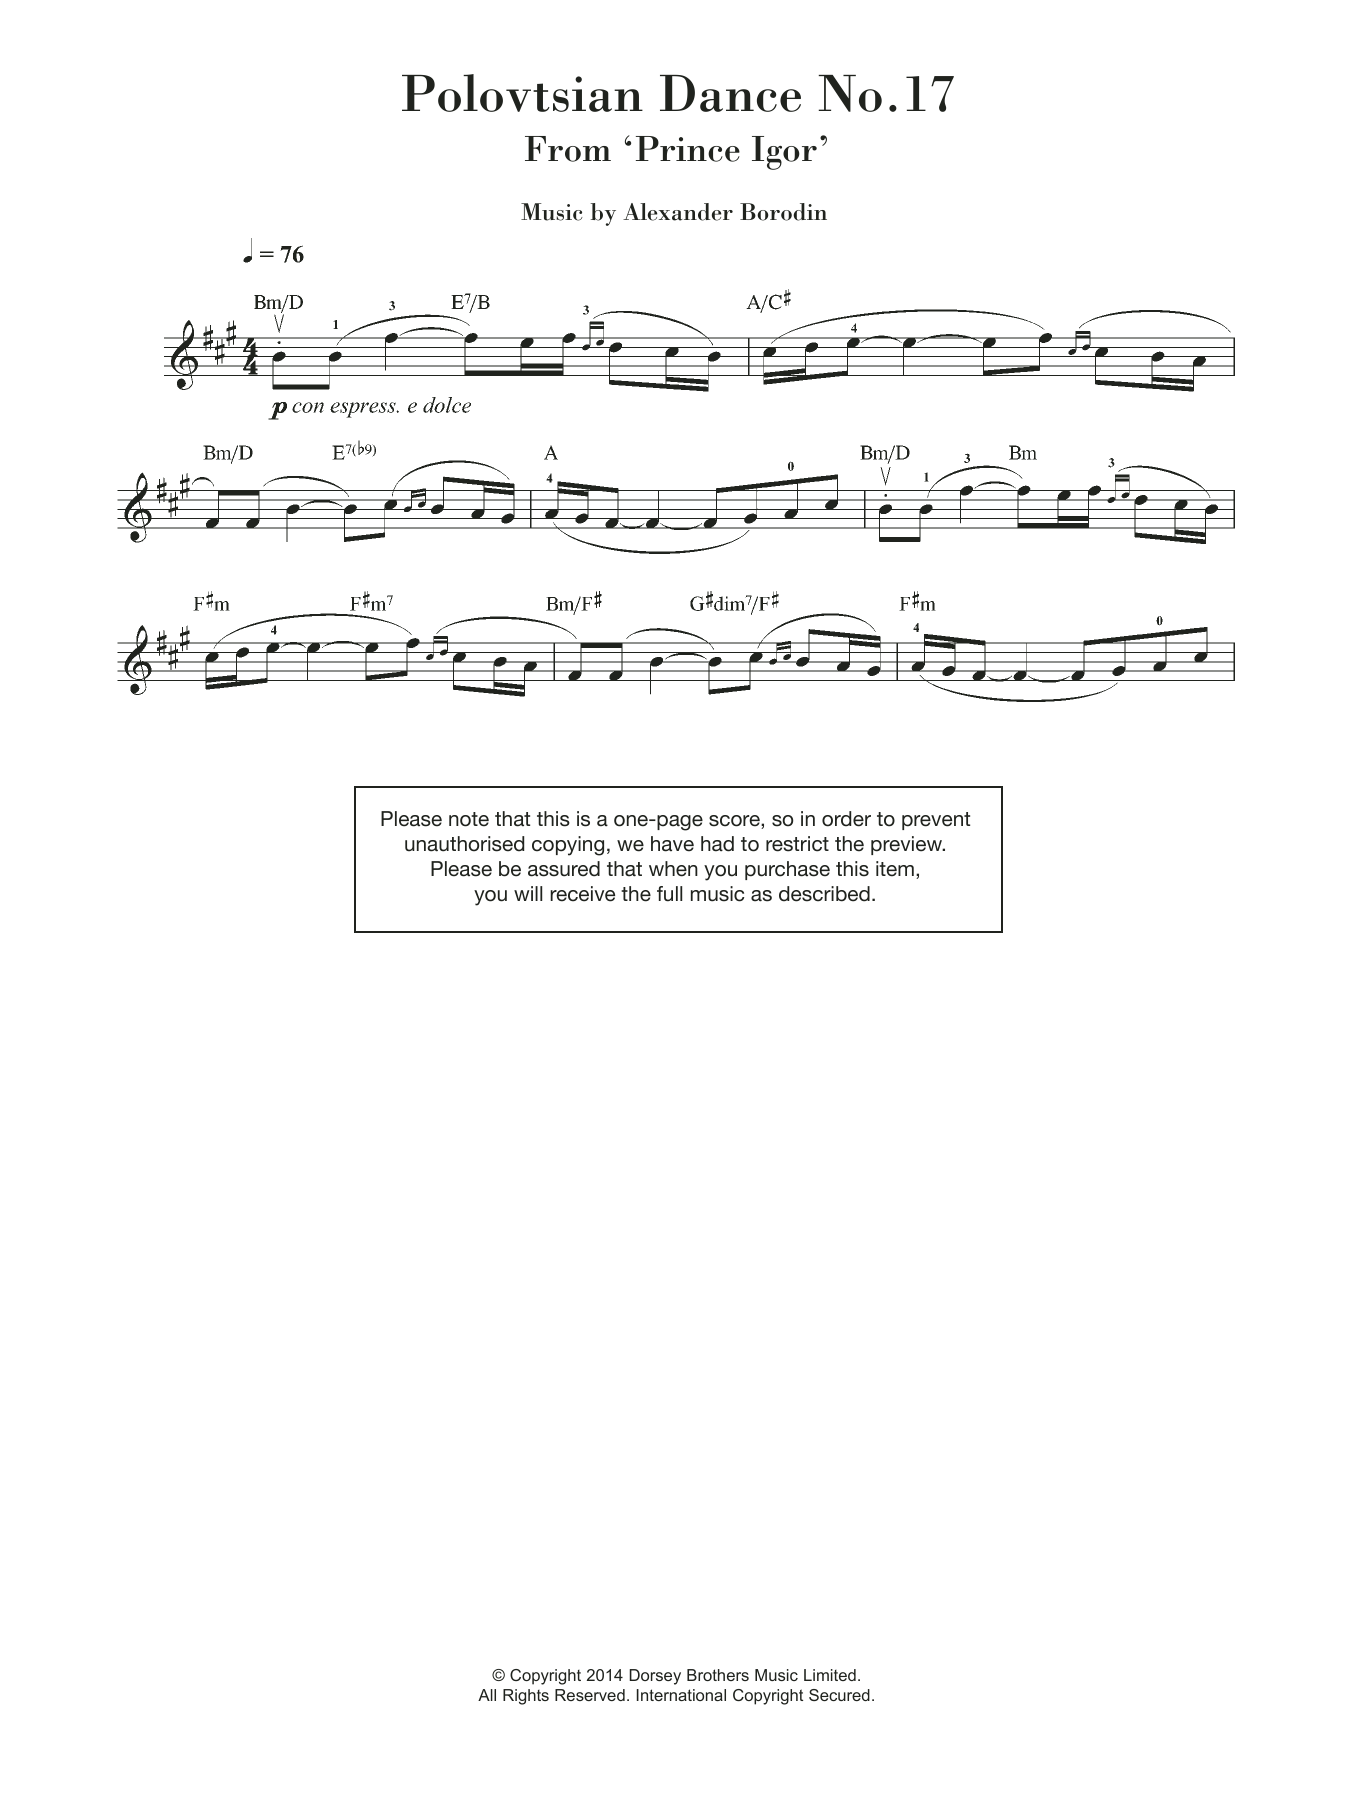 Alexander Borodin Polovtsian Dance No.17 (from 'Prince Igor') Sheet Music Notes & Chords for Violin - Download or Print PDF